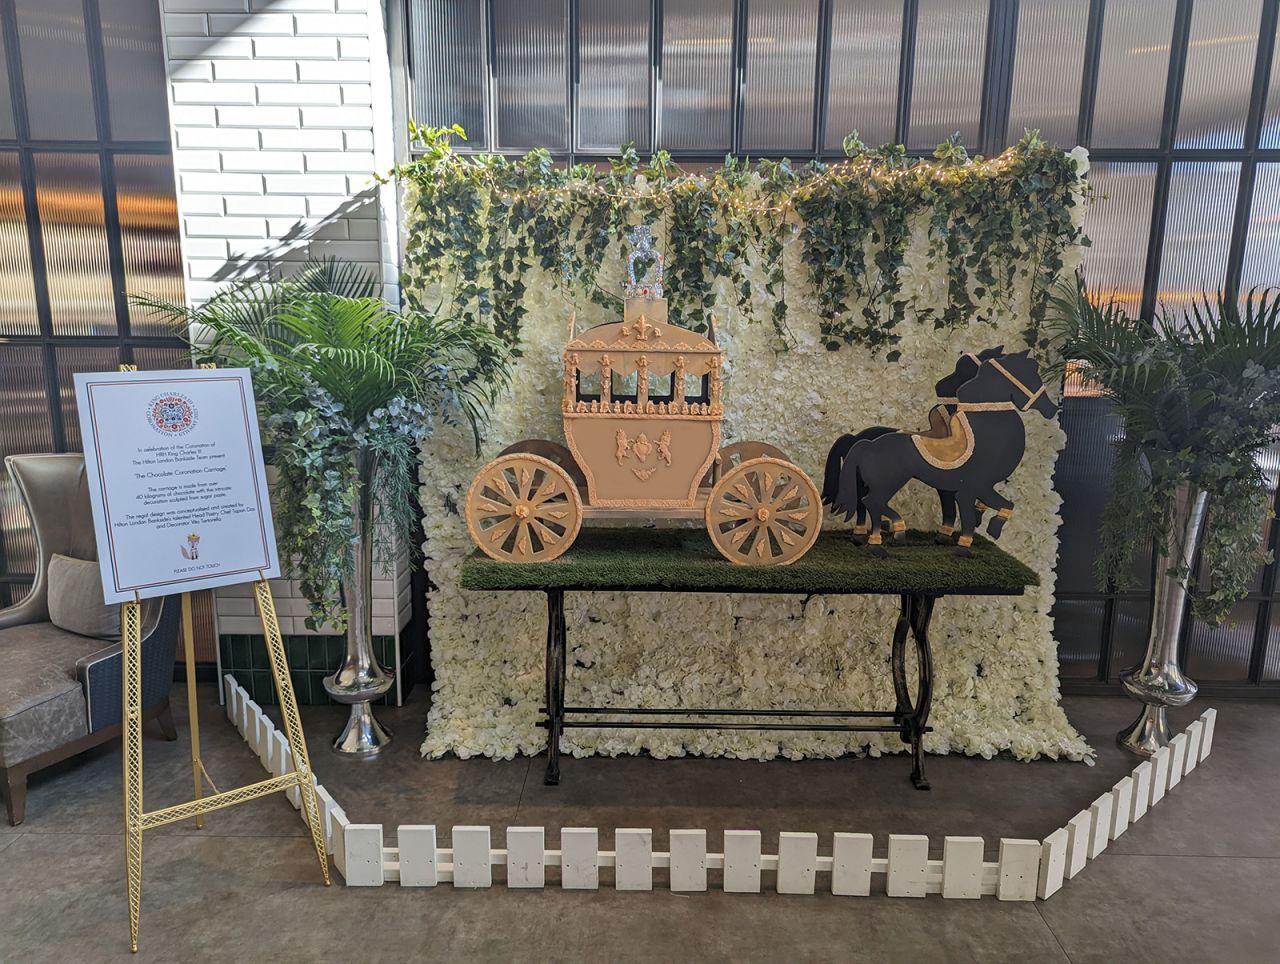 Hilton London Bankside has created a chocolate carriage to celebrate the coronation.